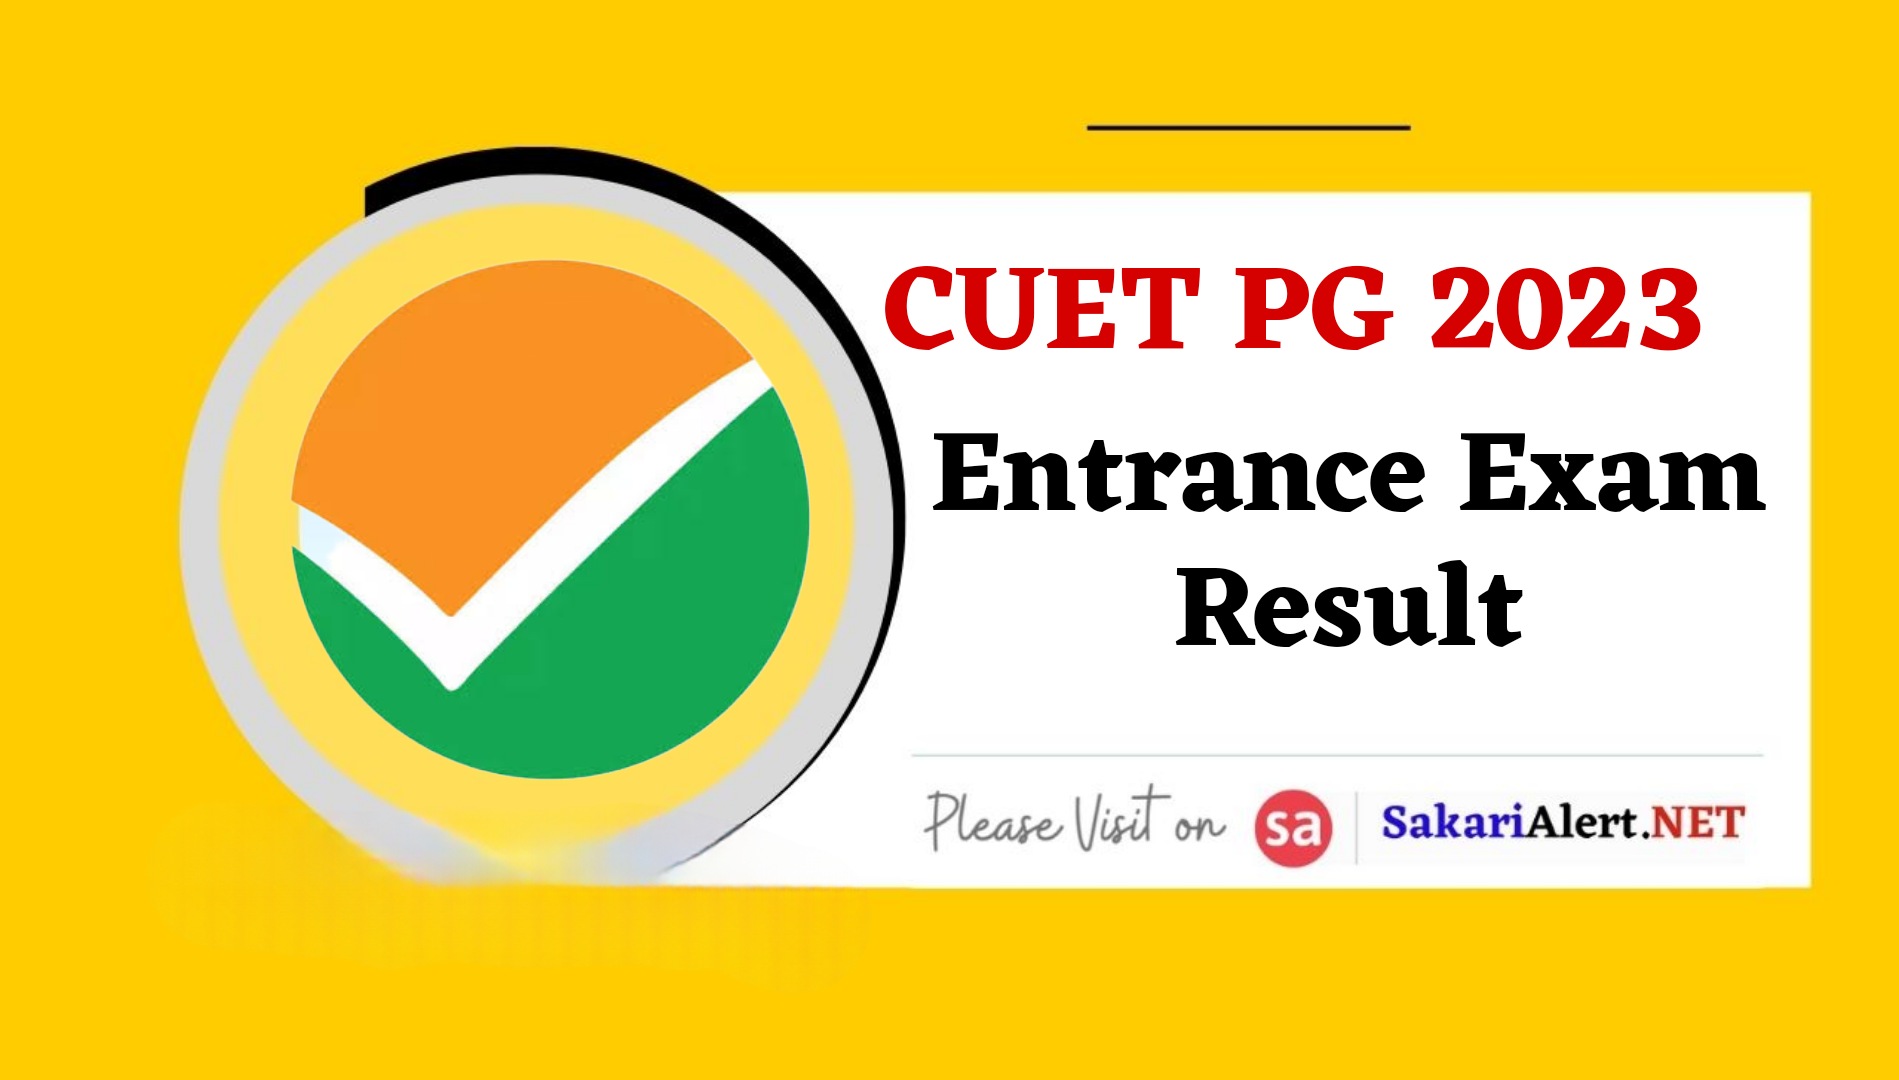 CUET PG 2023 Entrance Exam Result